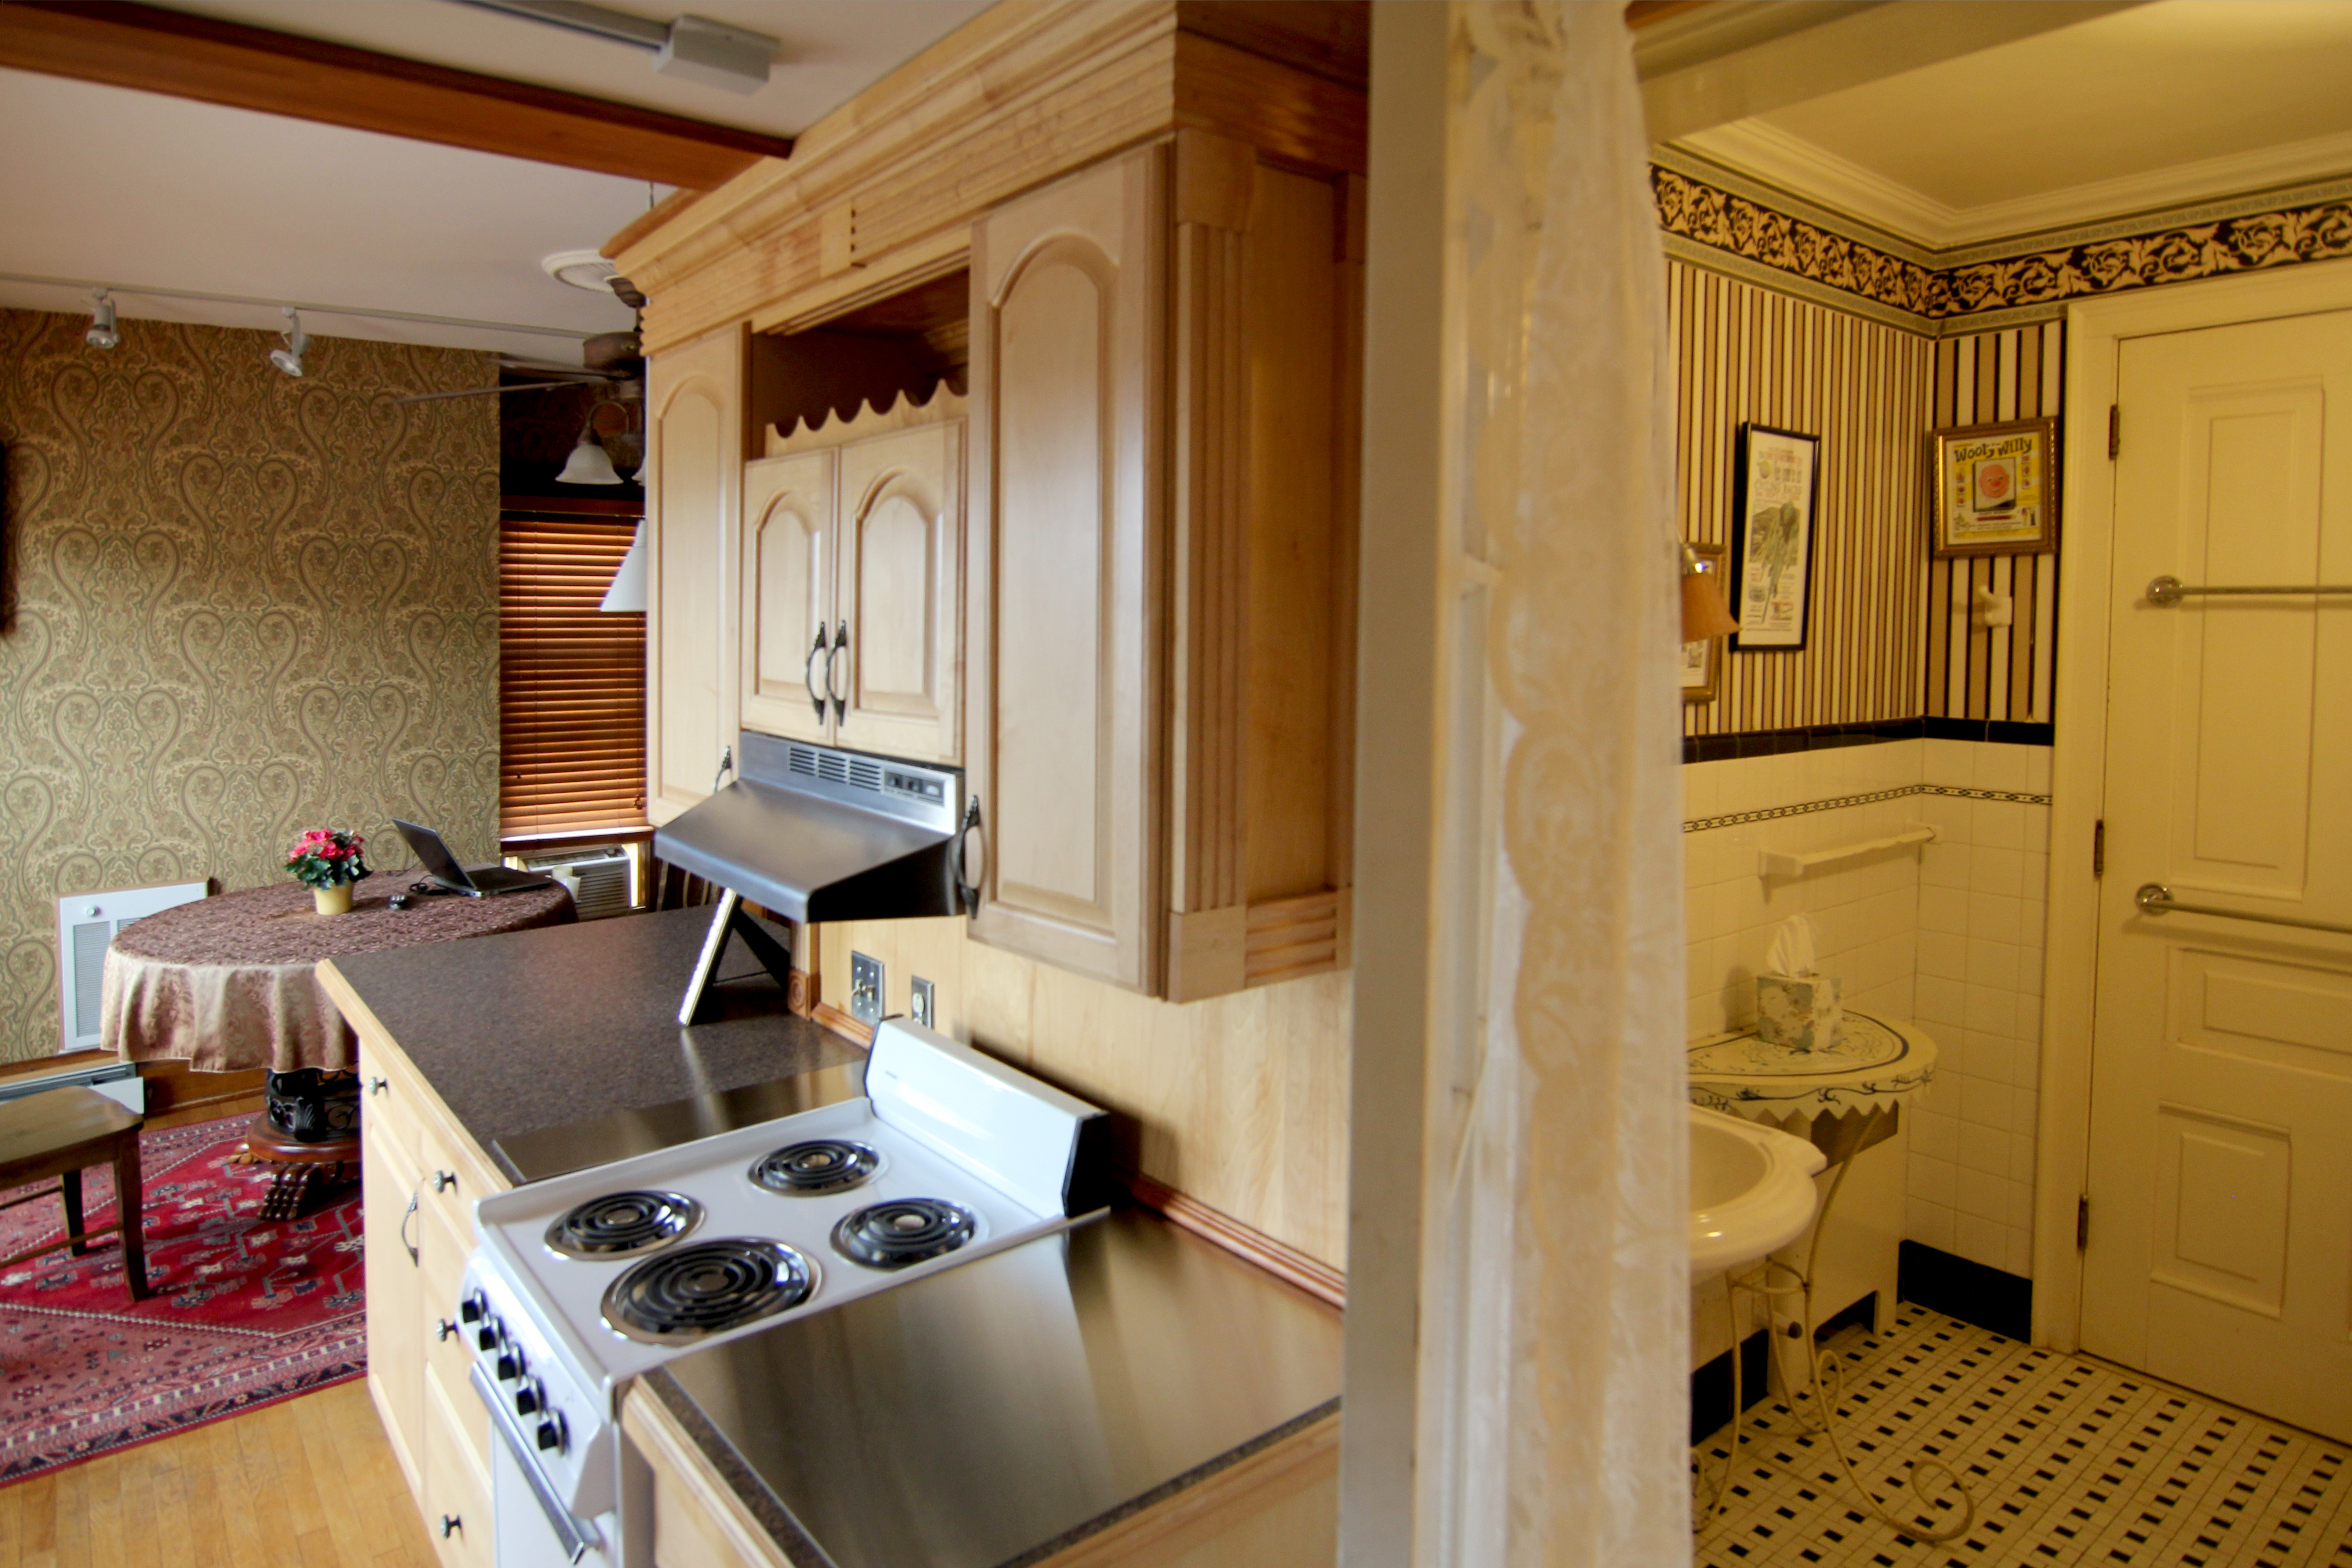 MDI Hamlin Suite Kitchen with view into Bath